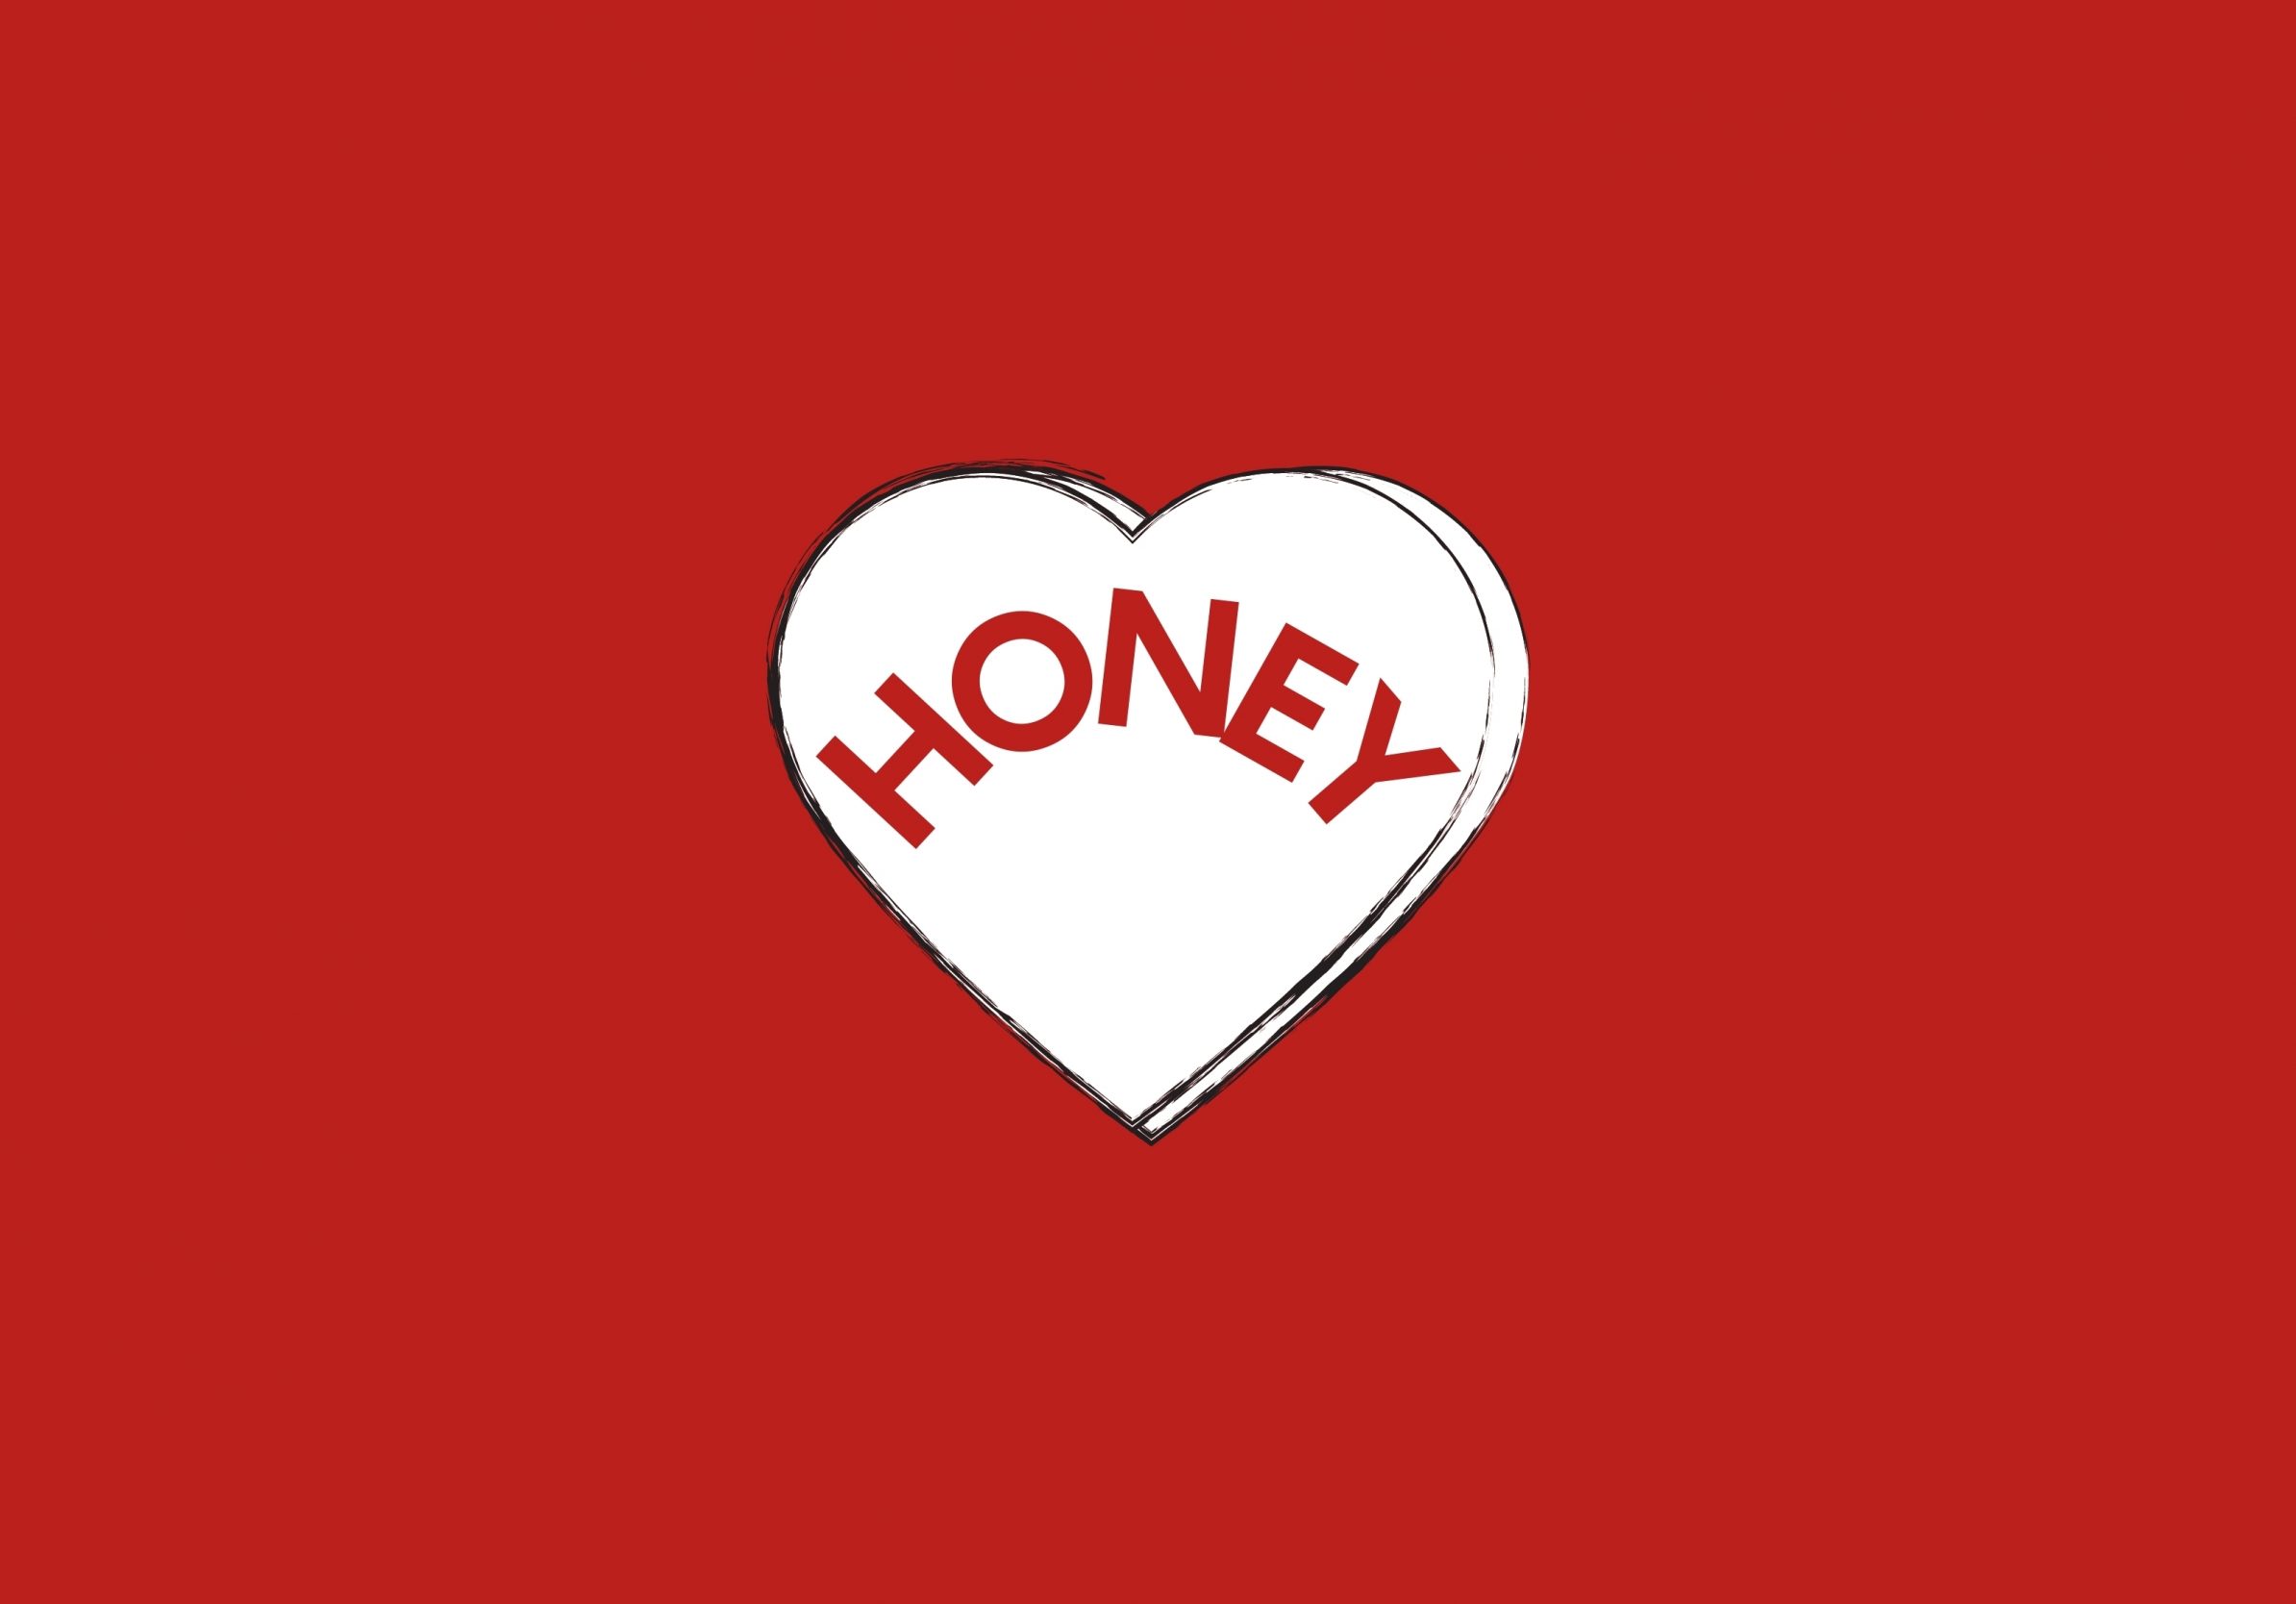 2388x1668 iPad Pro wallpapers Love Heart Honey Valentines Day iPad Wallpaper 2388x1668 pixels resolution